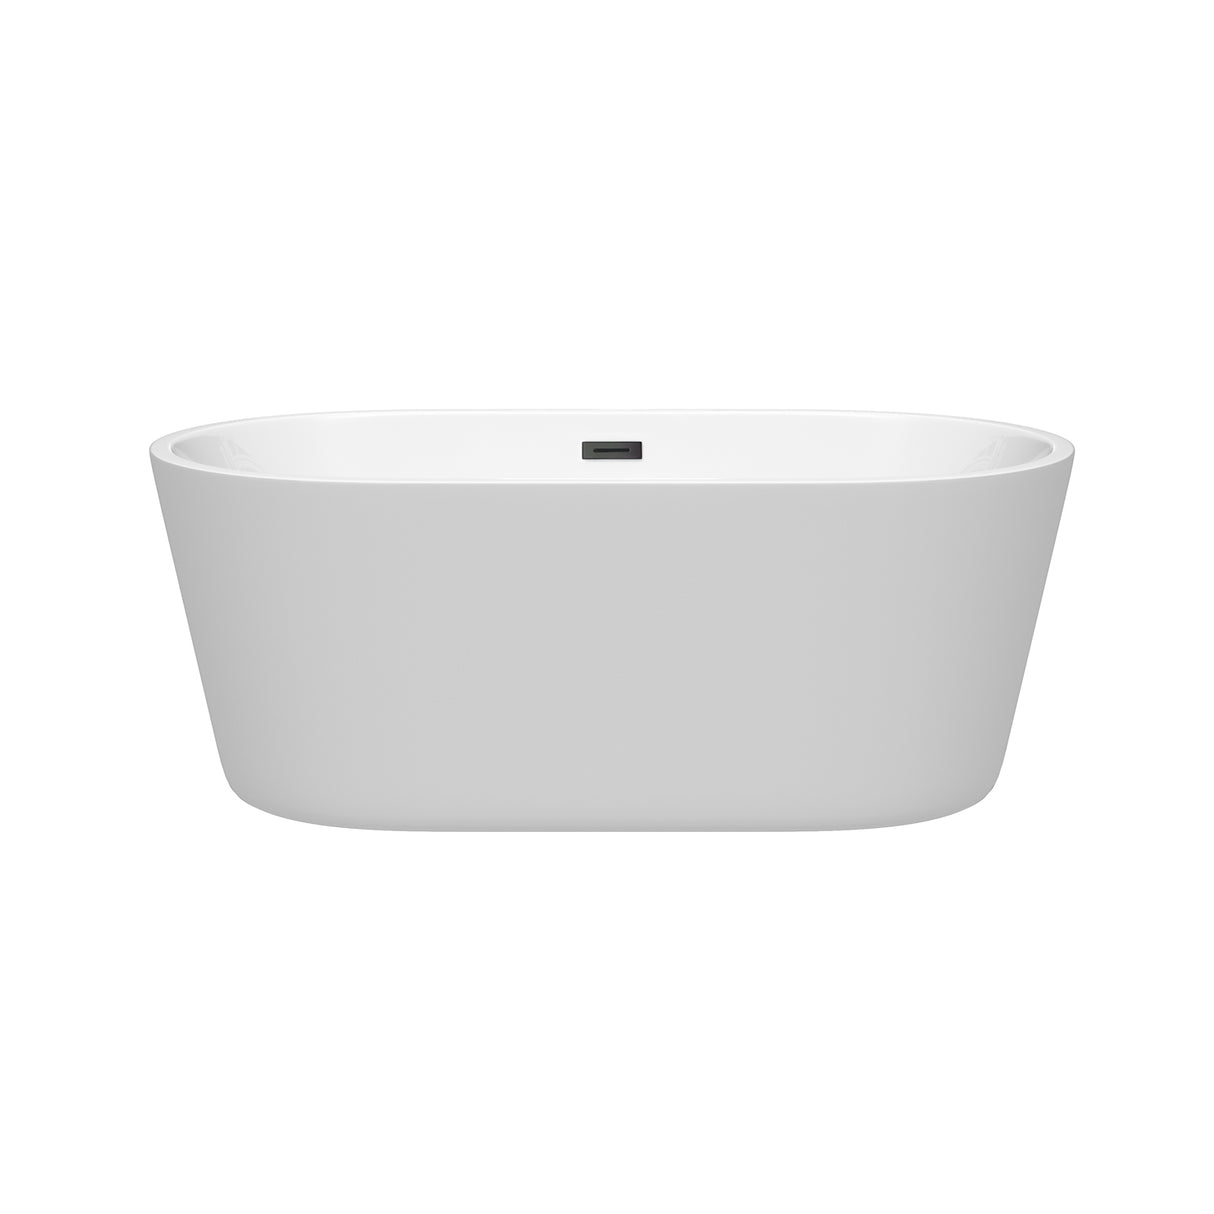 Carissa 60 Inch Freestanding Bathtub in White with Matte Black Drain and Overflow Trim